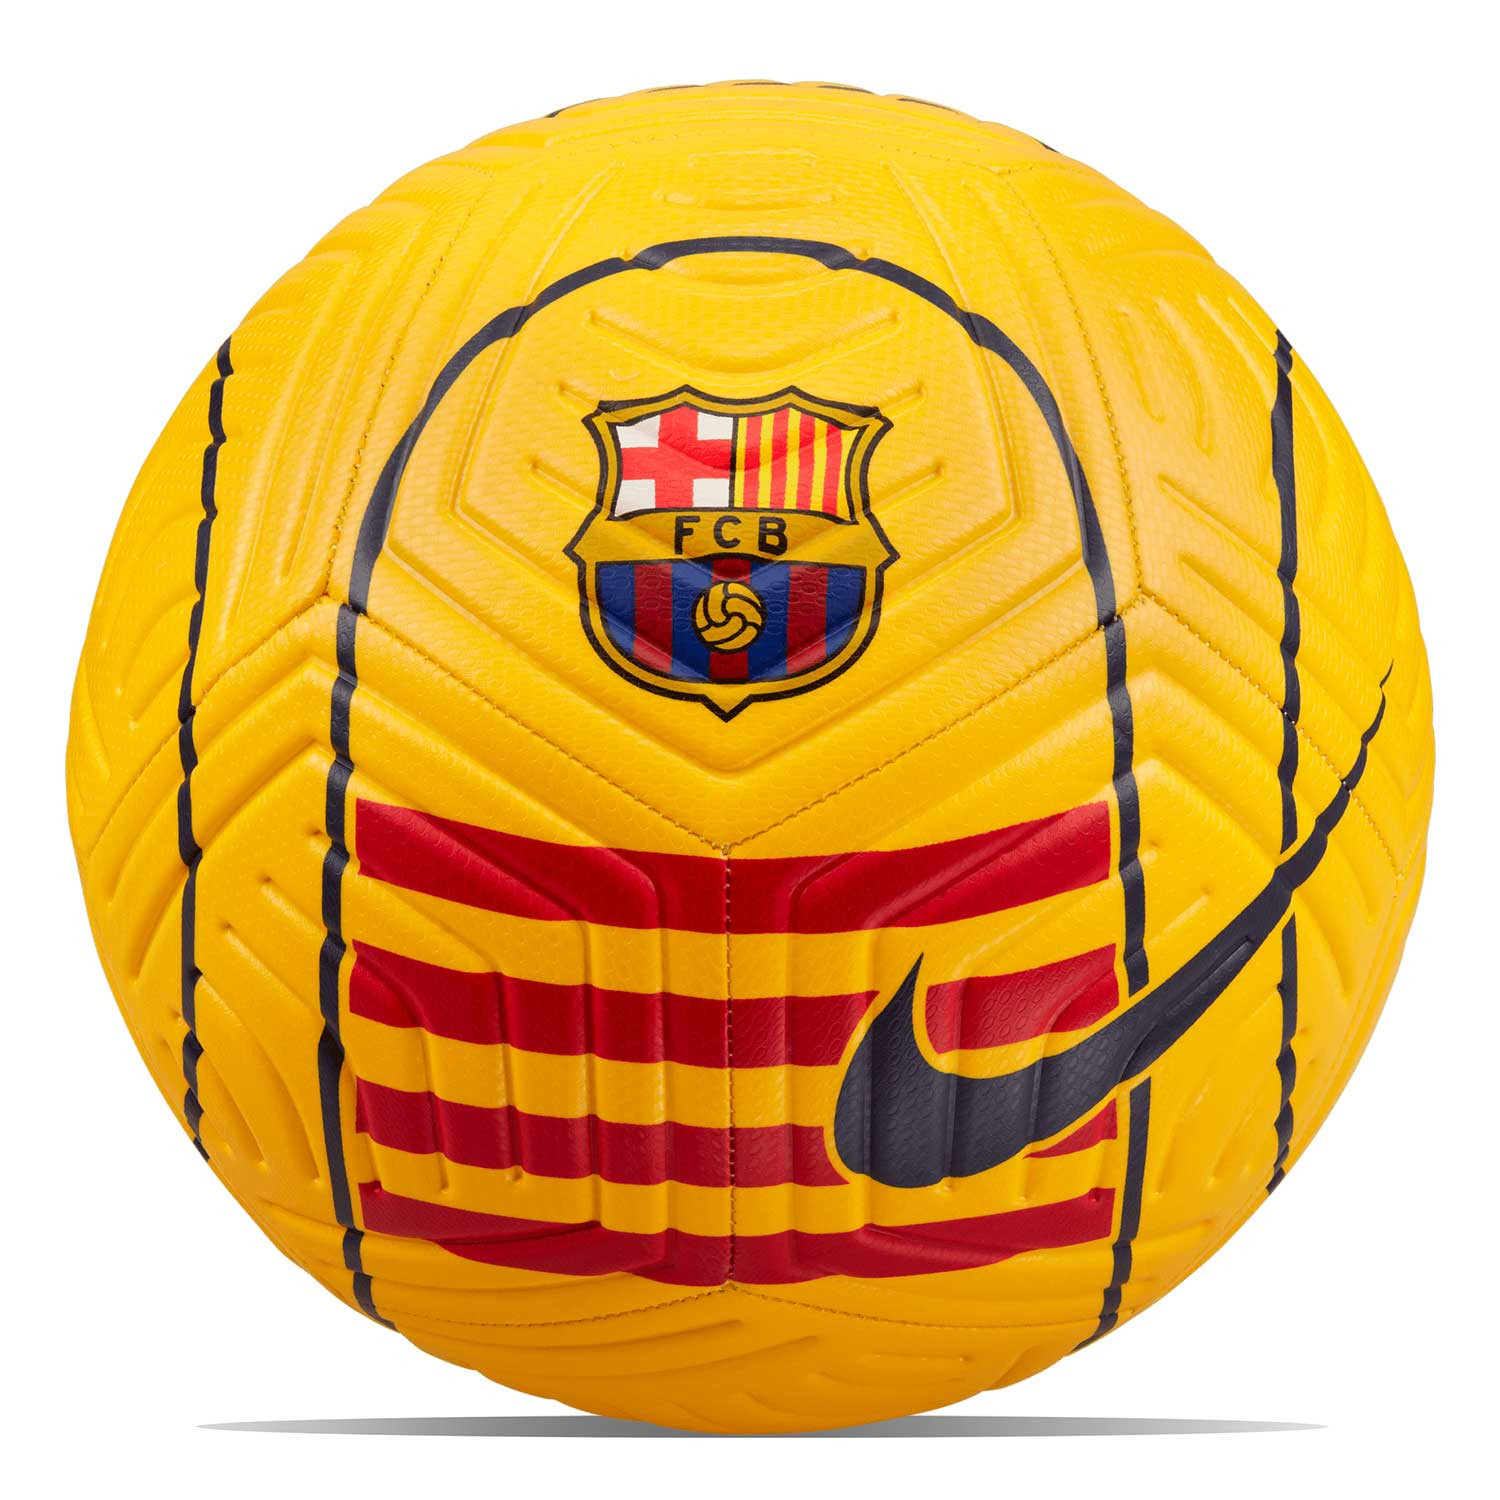 FC Barcelona Soccer Ball Size 5 Messi Barca Futbol Balon de Futbol